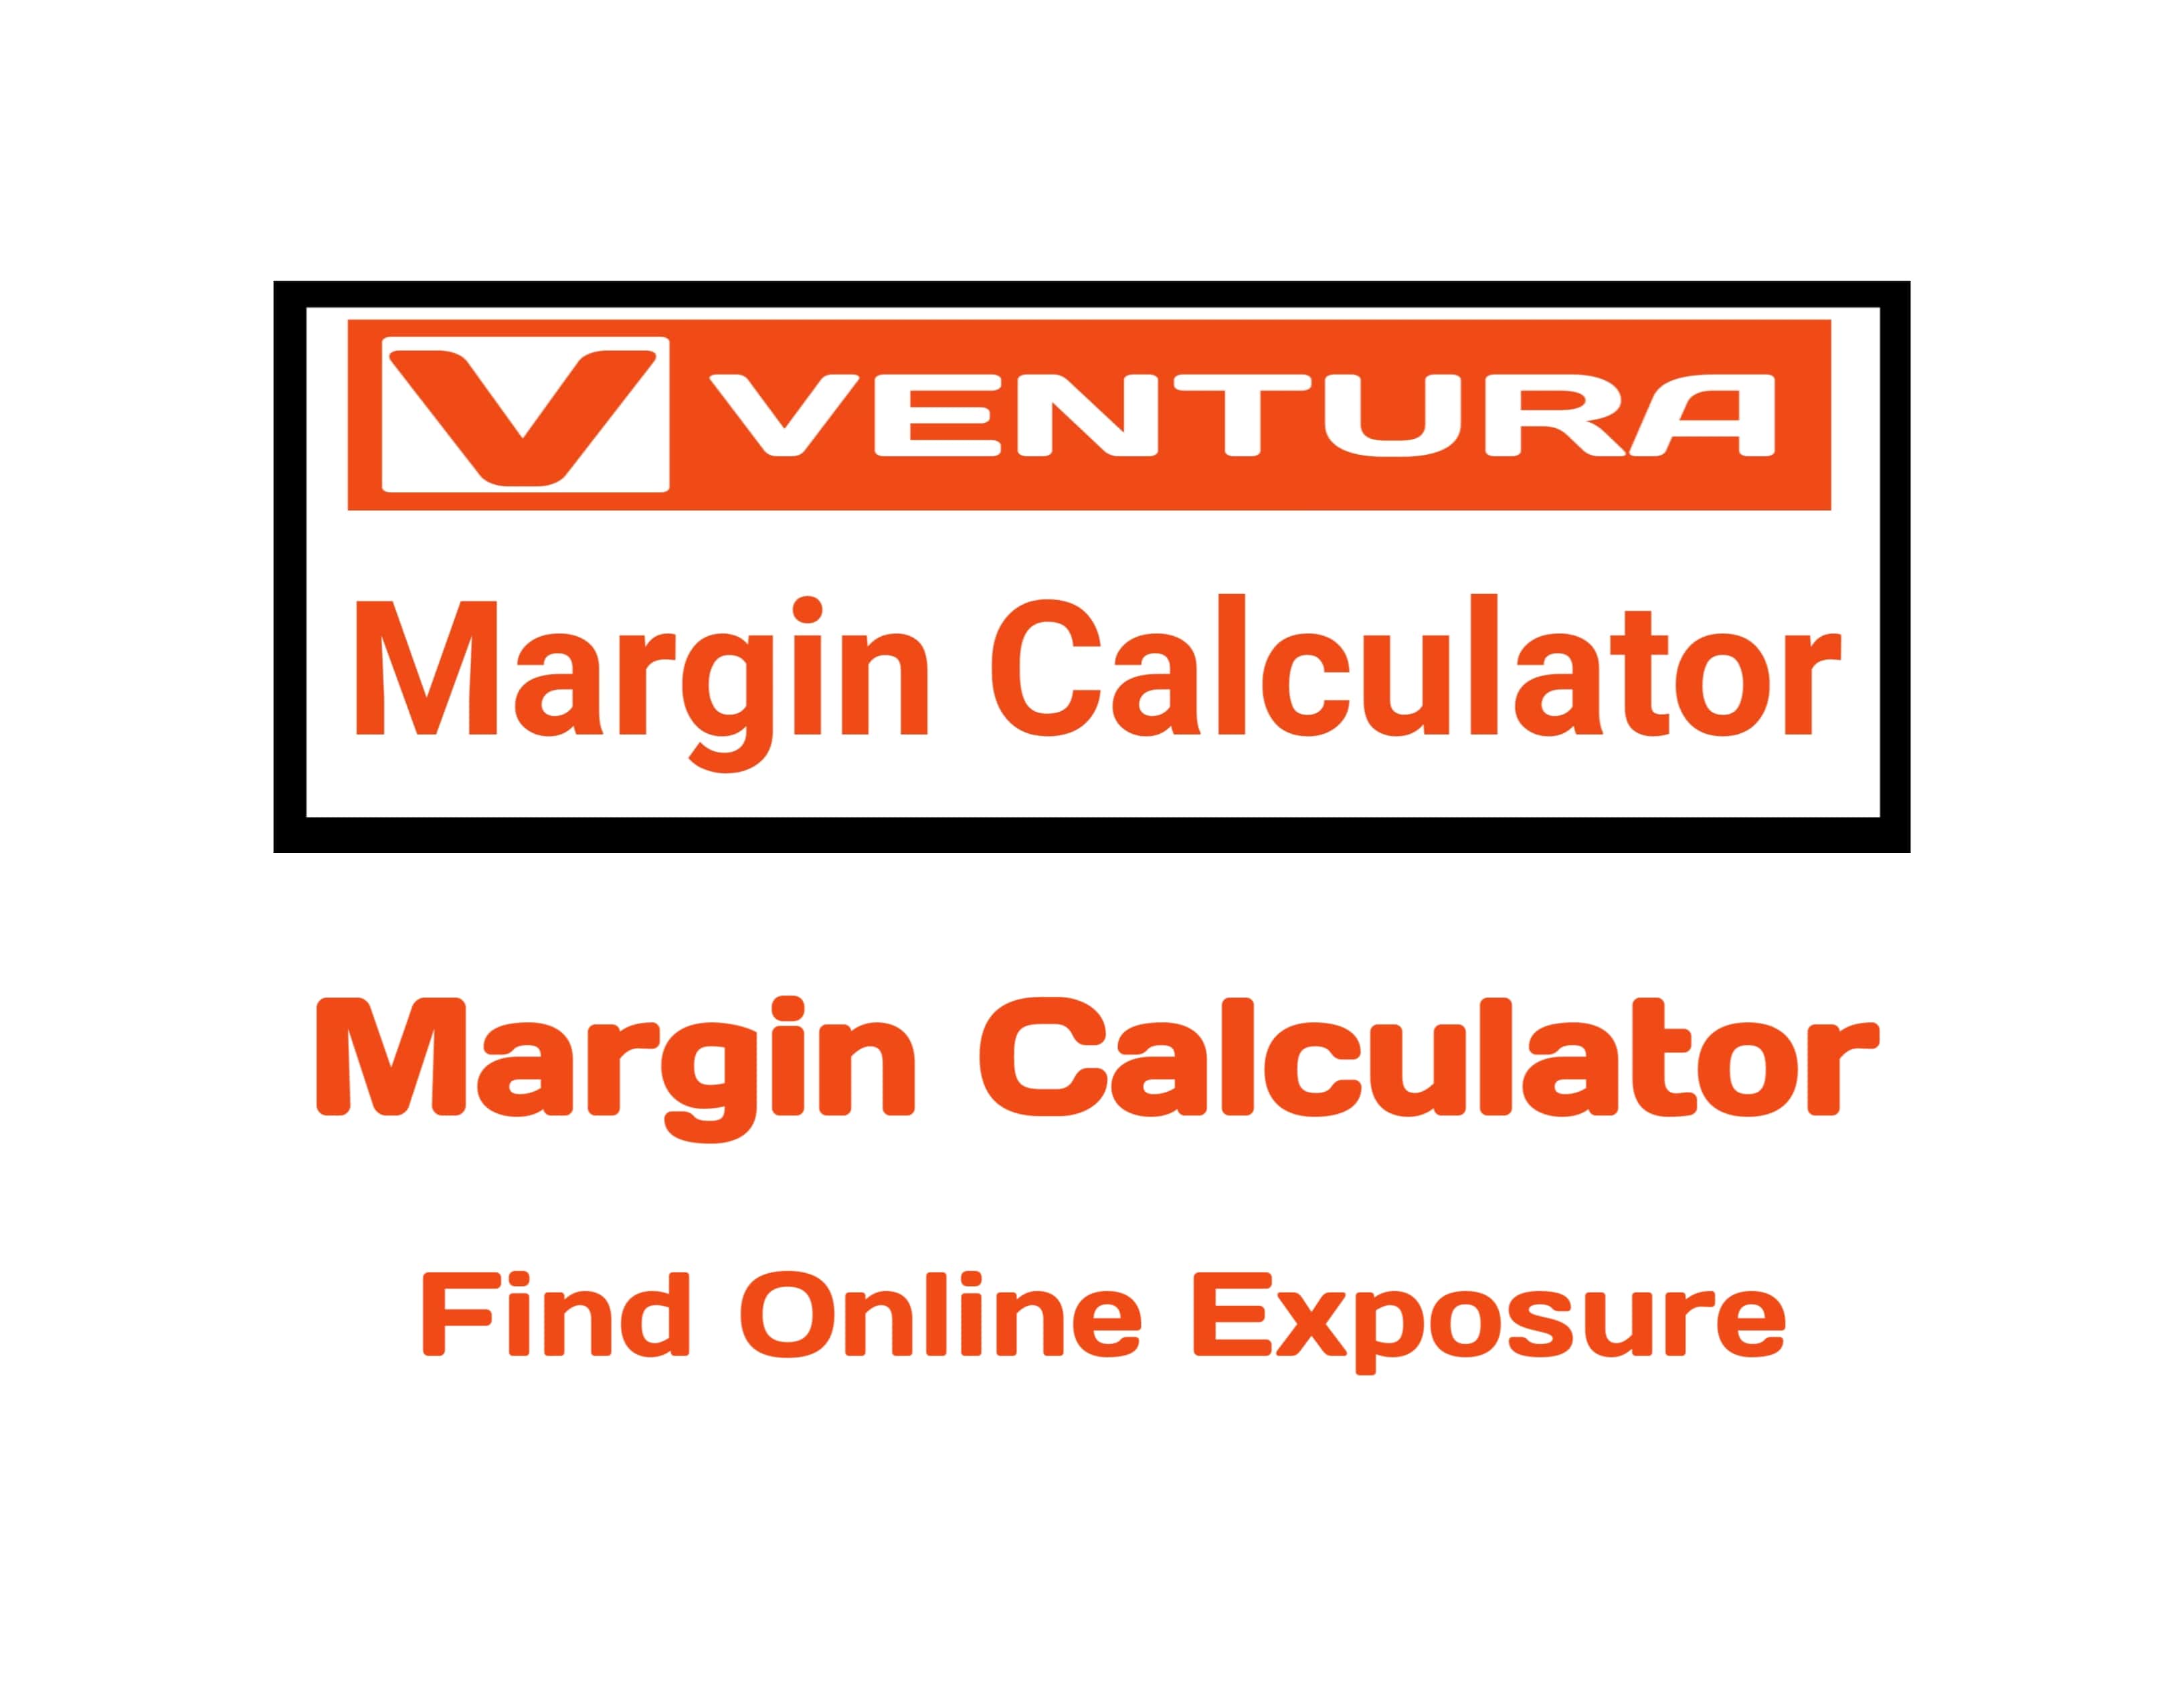 Ventura Capital Margin Calculator